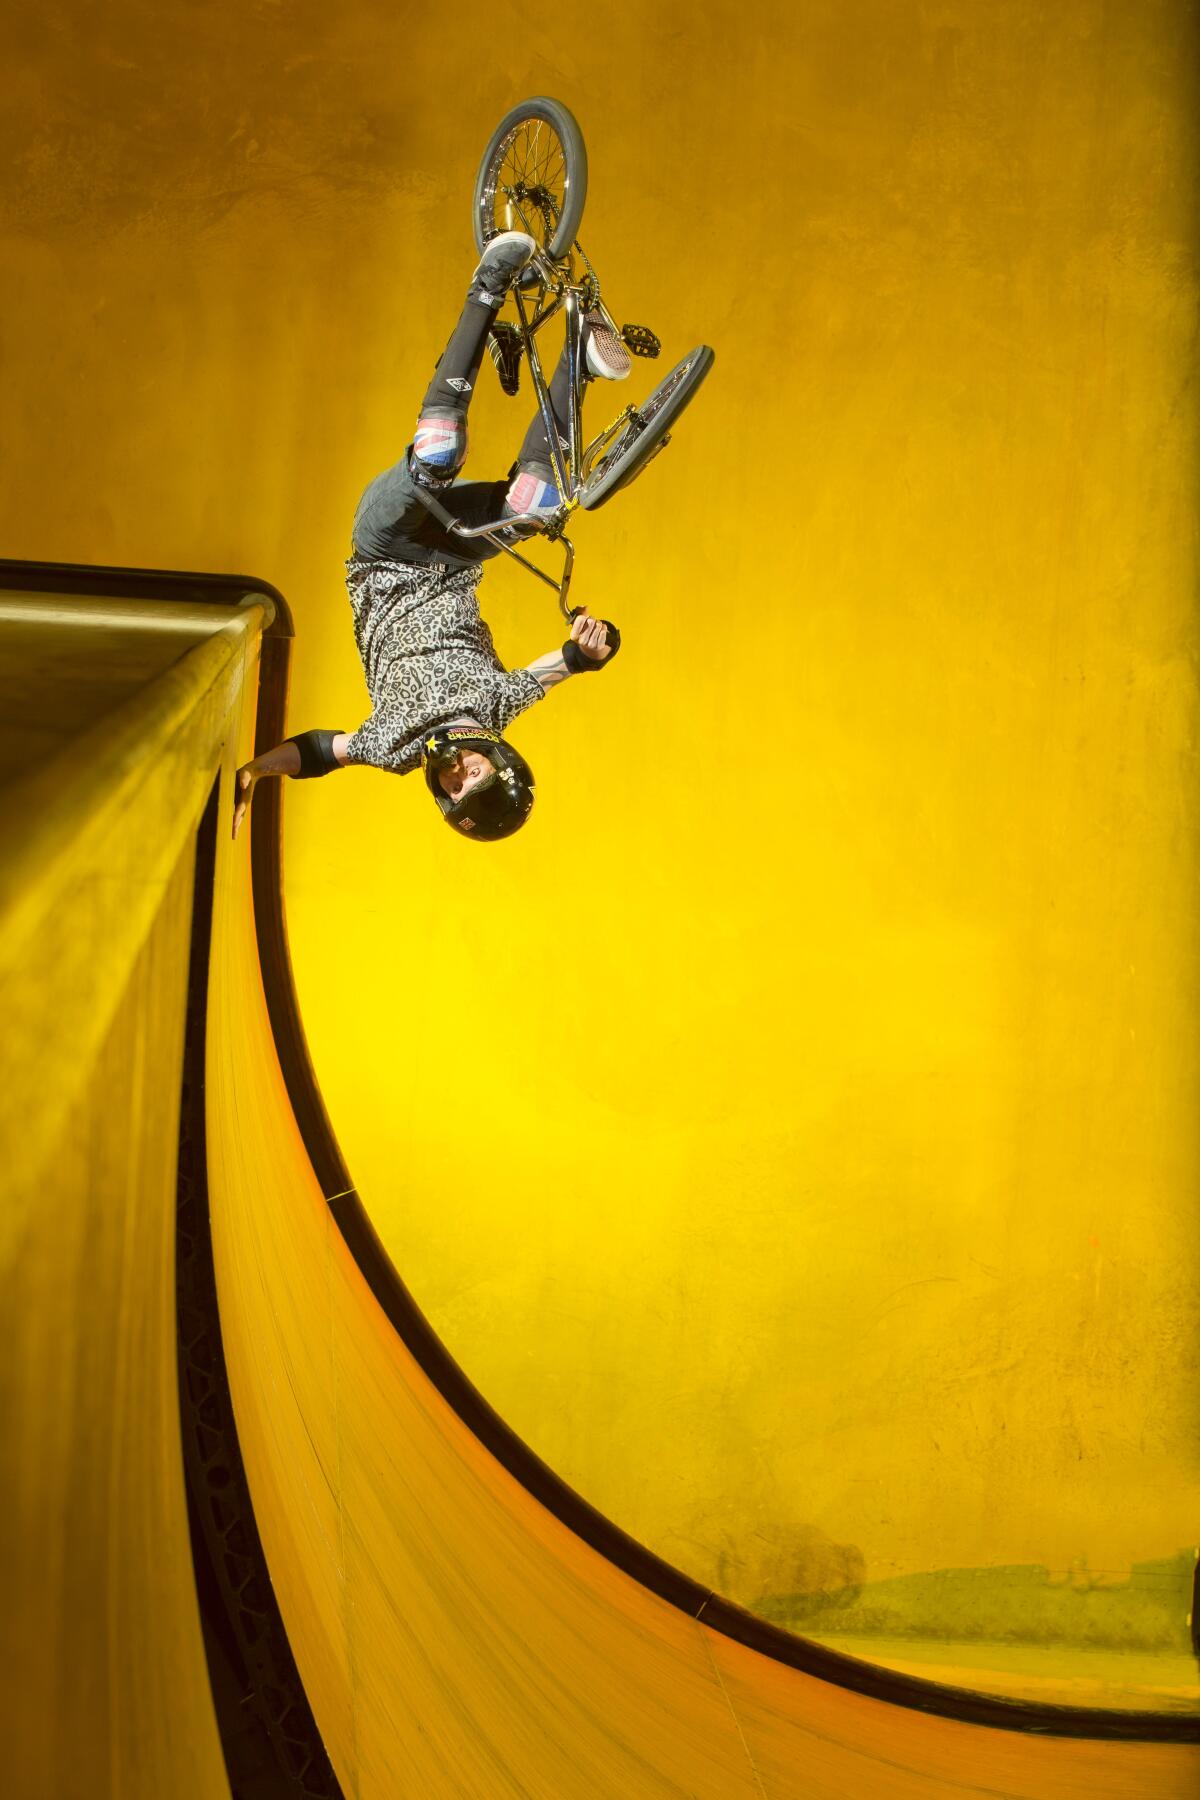 Eight-time BMX world champion Simon Tabron doing a trick on a vertical ramp.